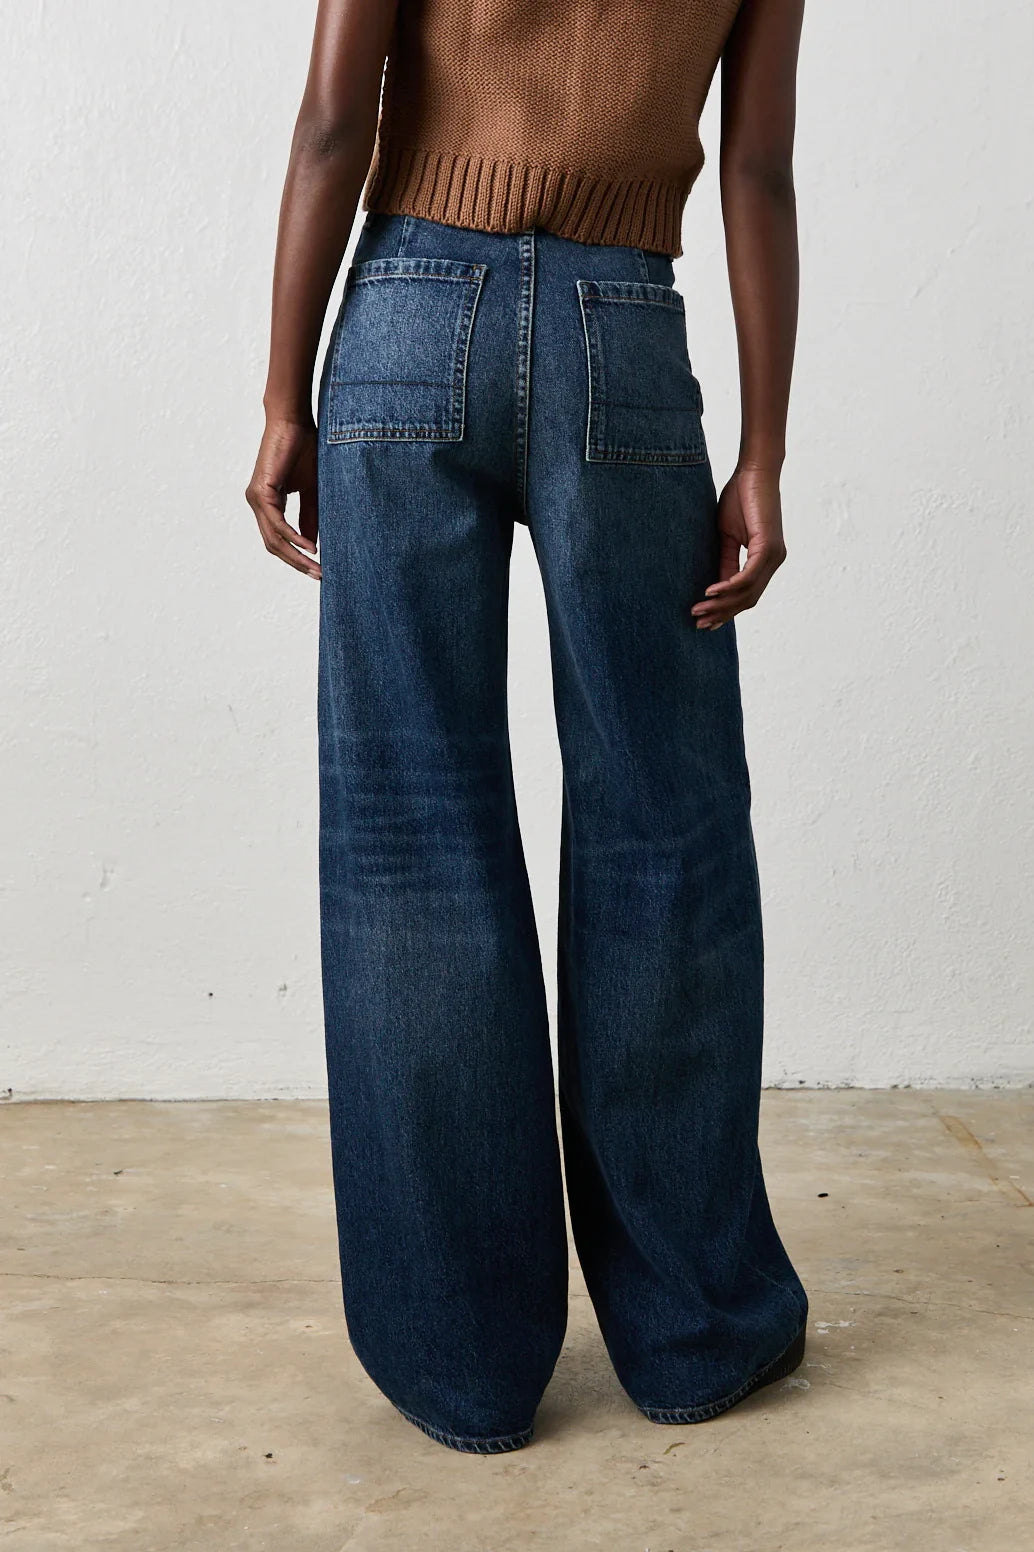 Delta Giant 5 Pocket Jean Pants NSF Clothing   